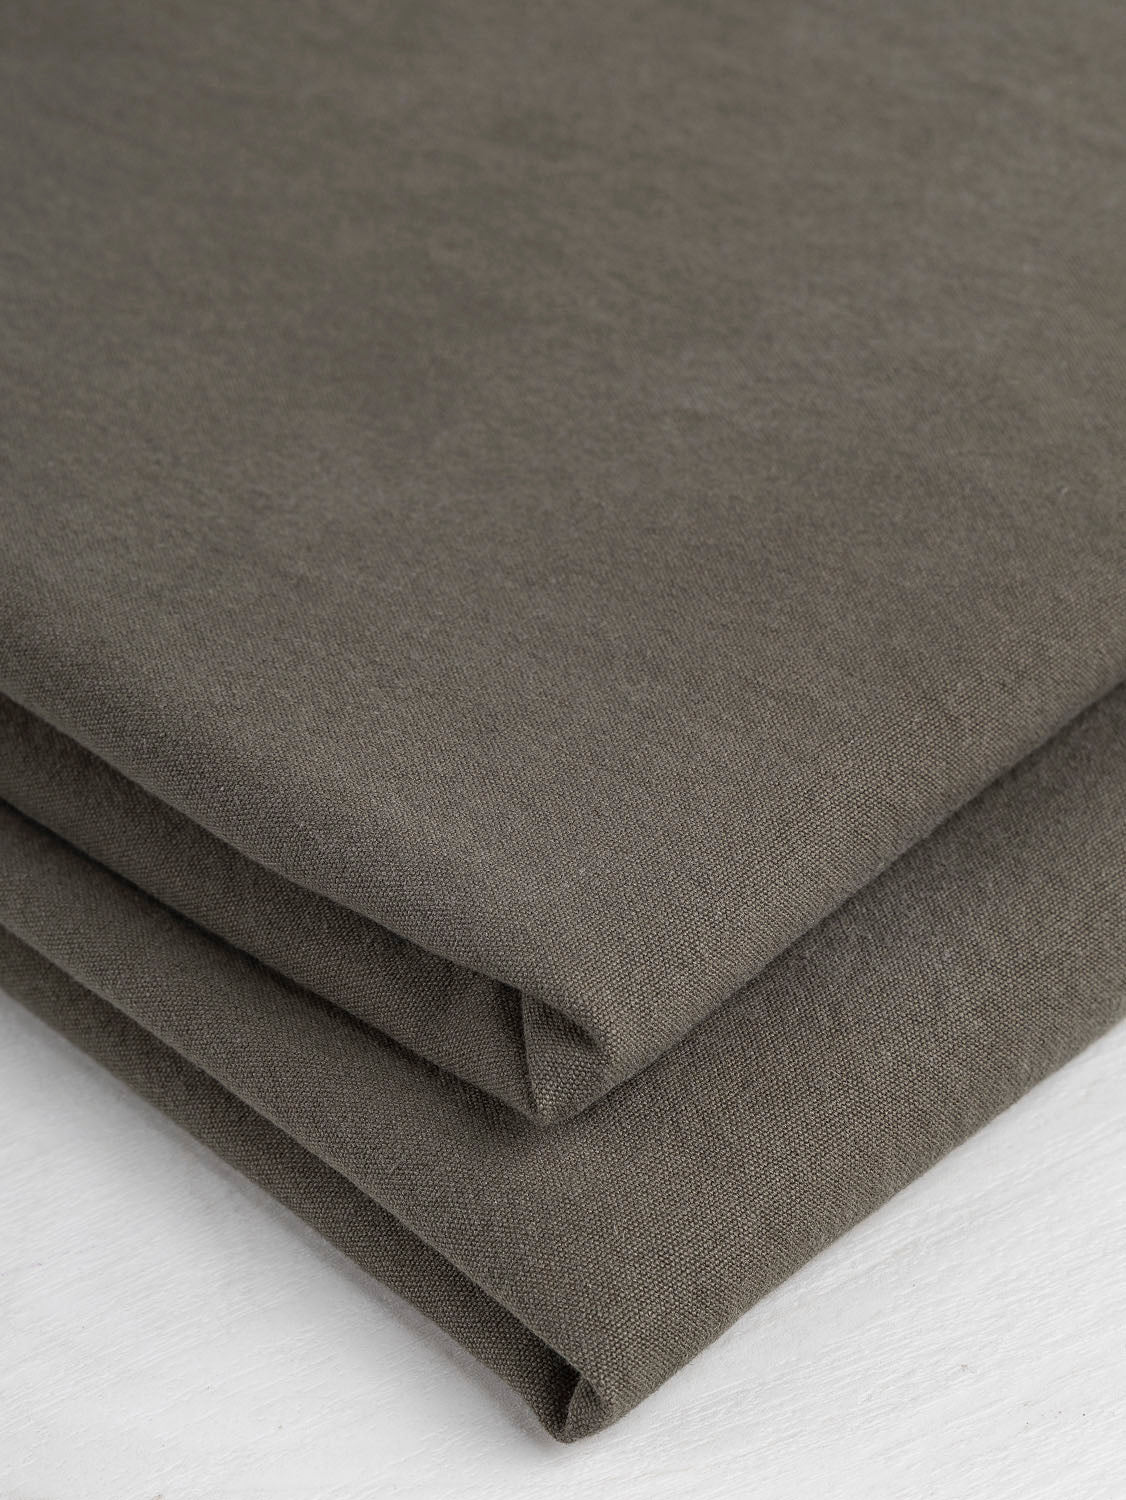 Substantial Organic Cotton Broadcloth - Sage | Core Fabrics